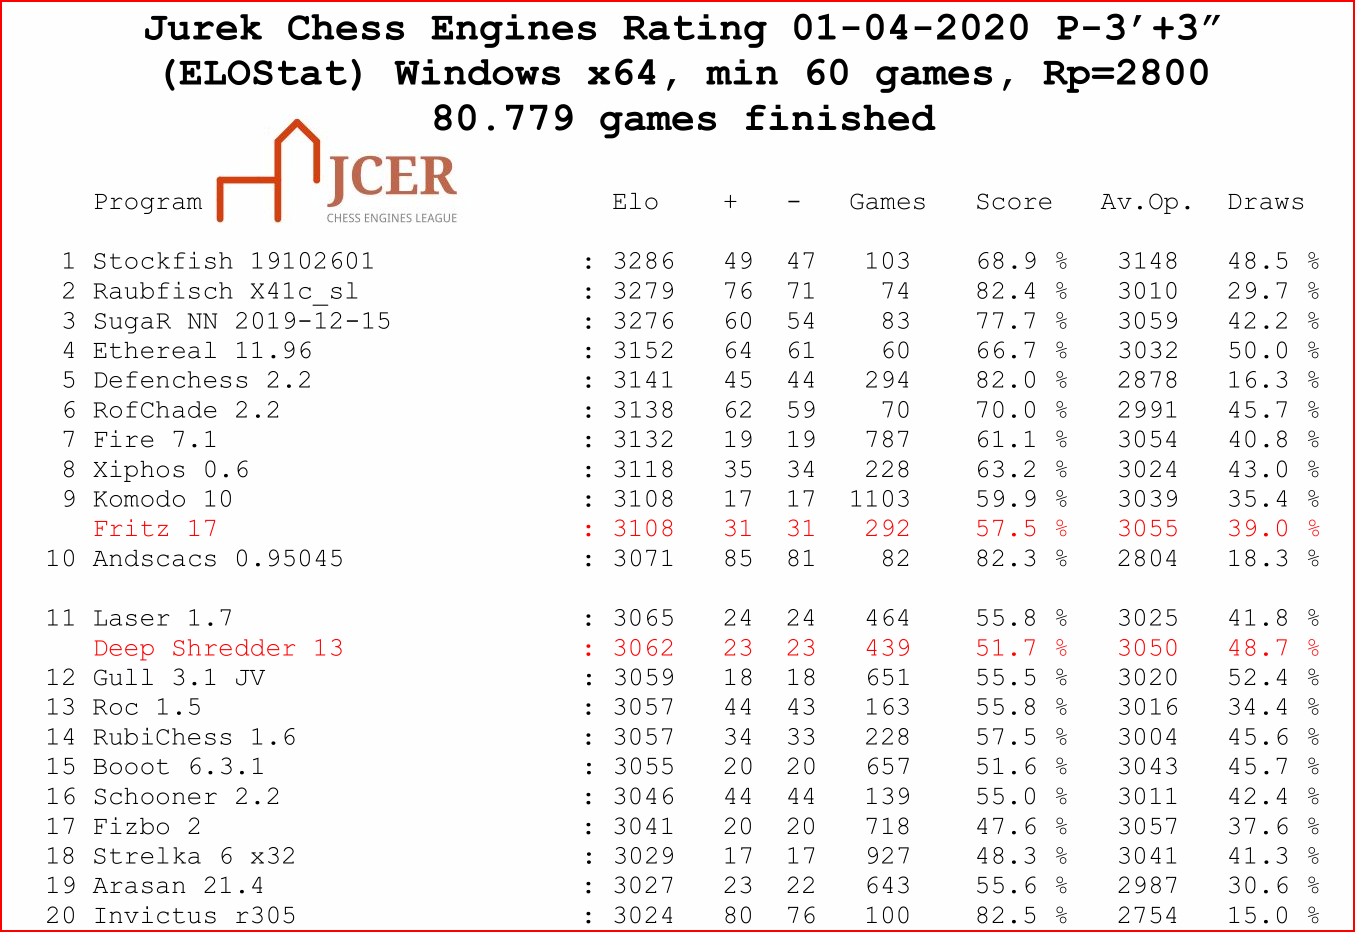 Chess Engines Diary: Rating JCER 01-09-2020